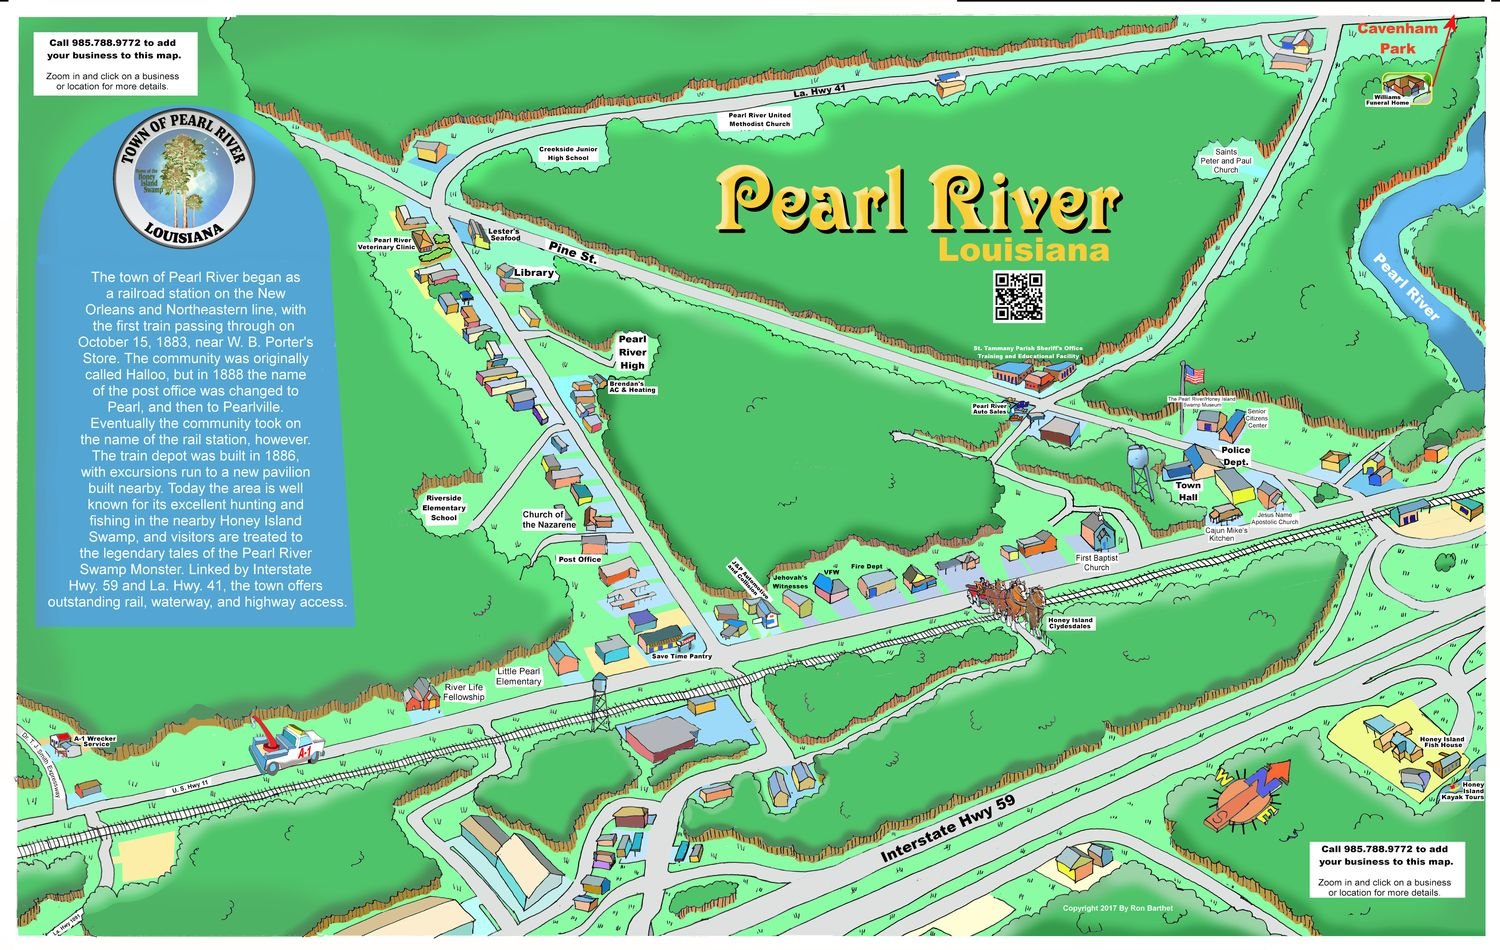 24" X 36" Full Color Caricature Rendering of Pearl River, LA